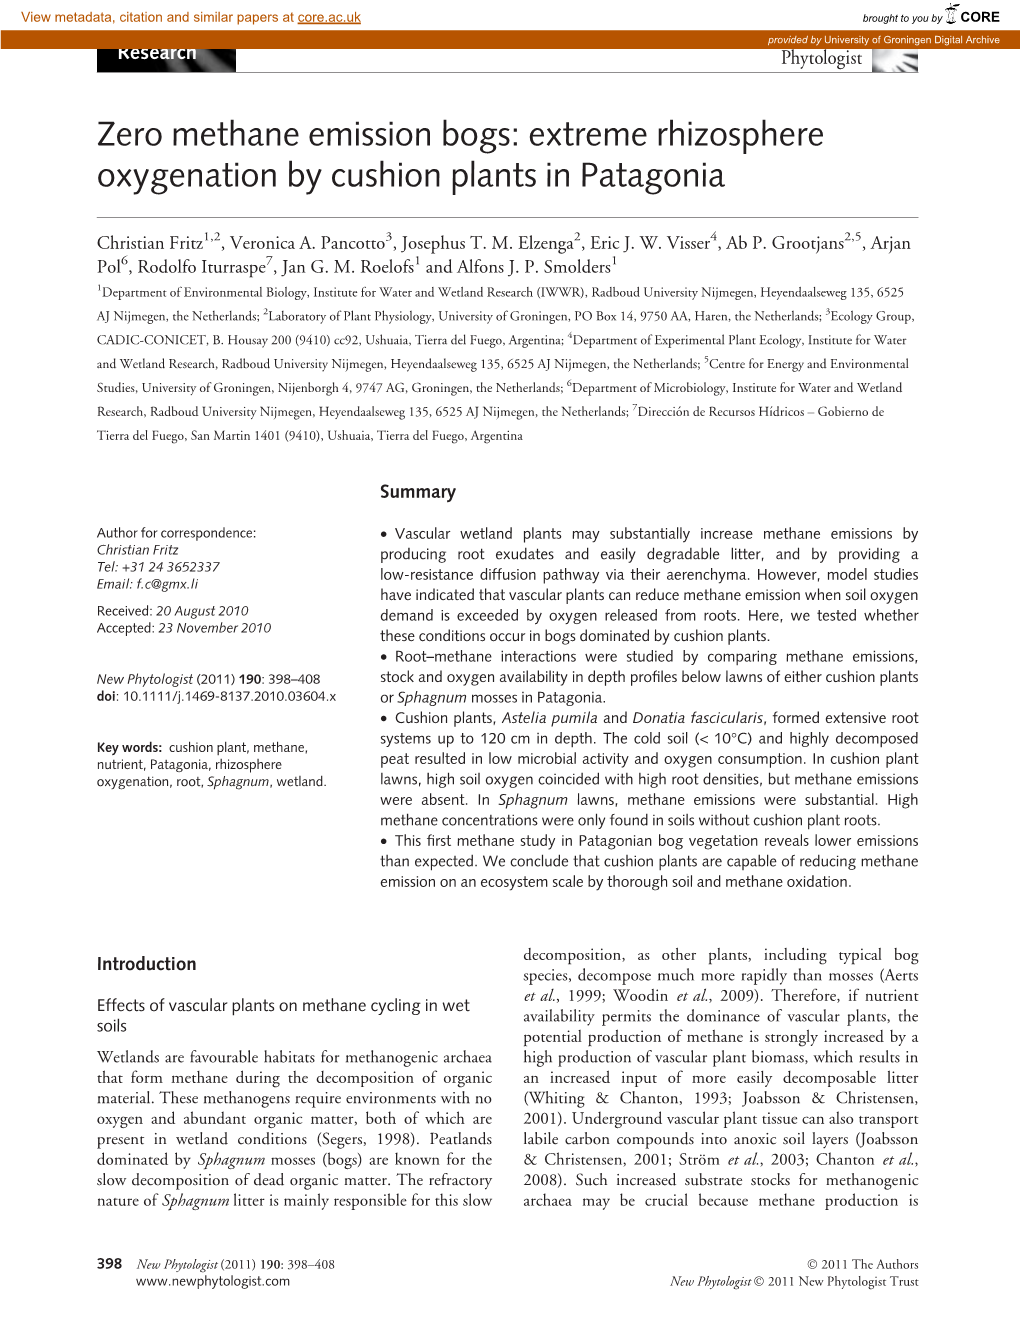 Extreme Rhizosphere Oxygenation by Cushion Plants in Patagonia